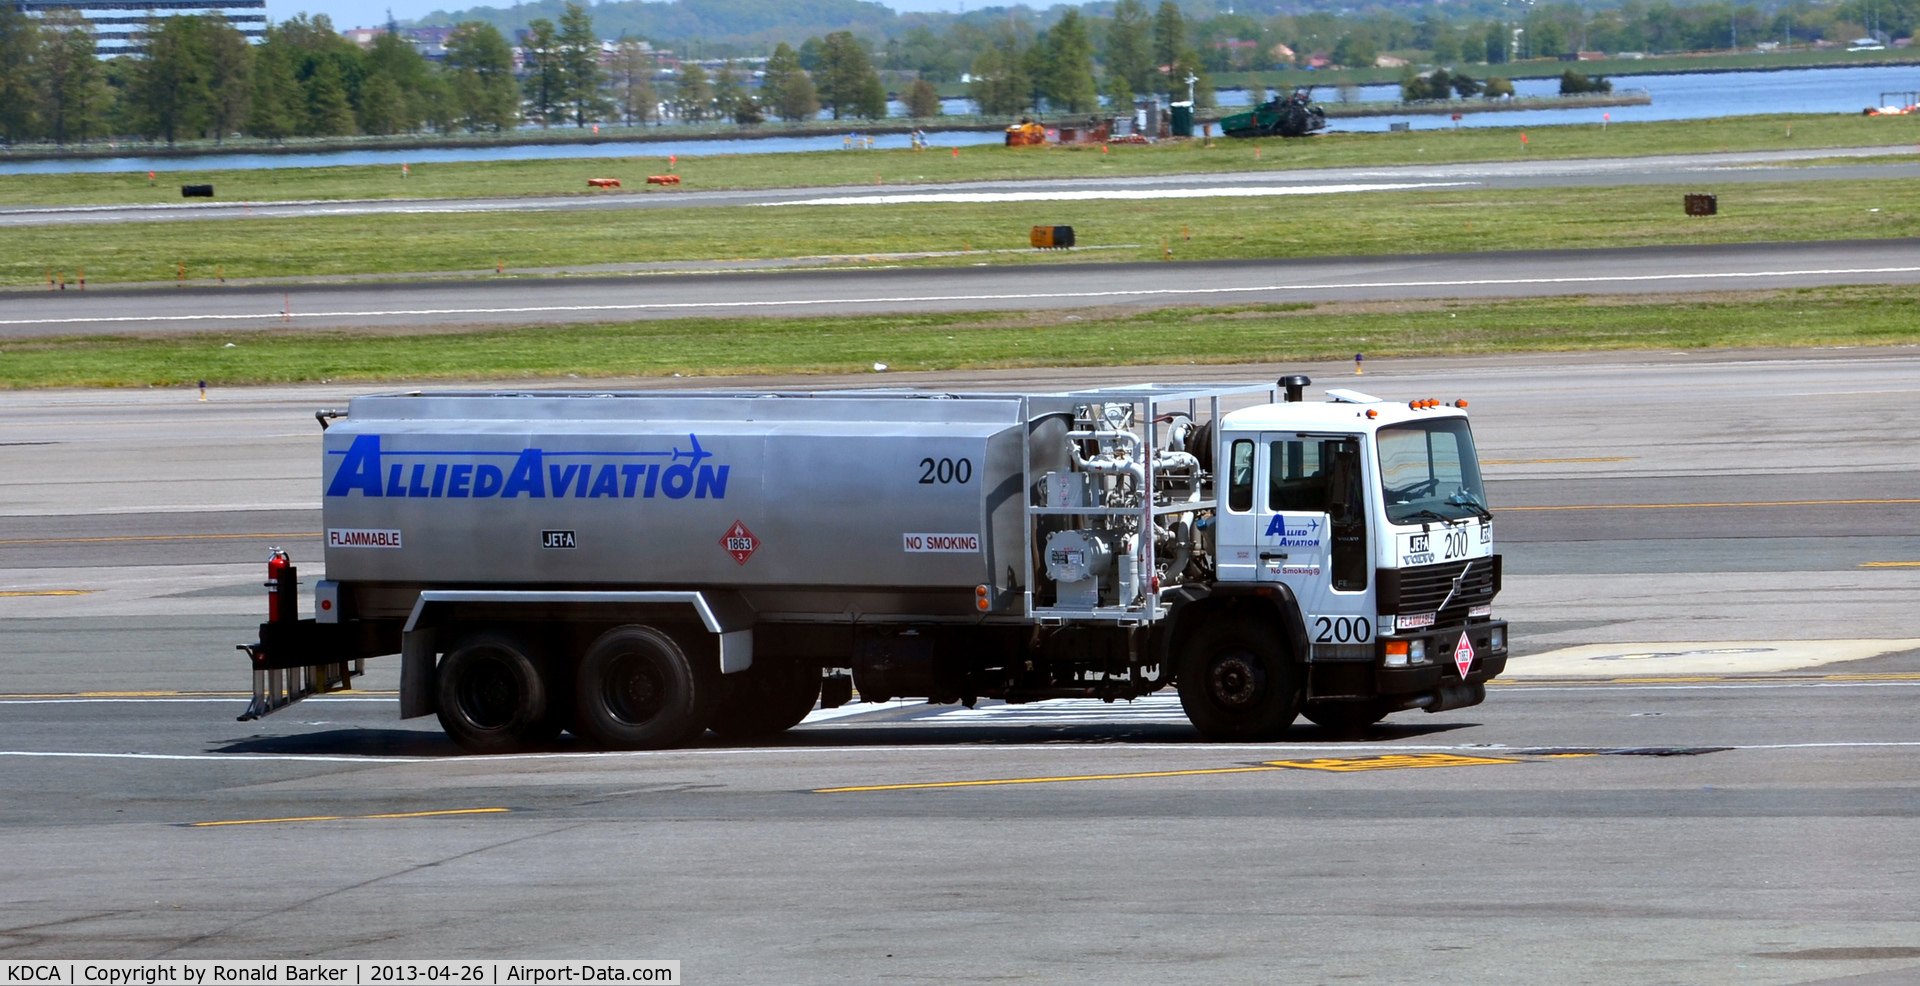 Ronald Reagan Washington National Airport (DCA) - Allied Aviation Truck  200